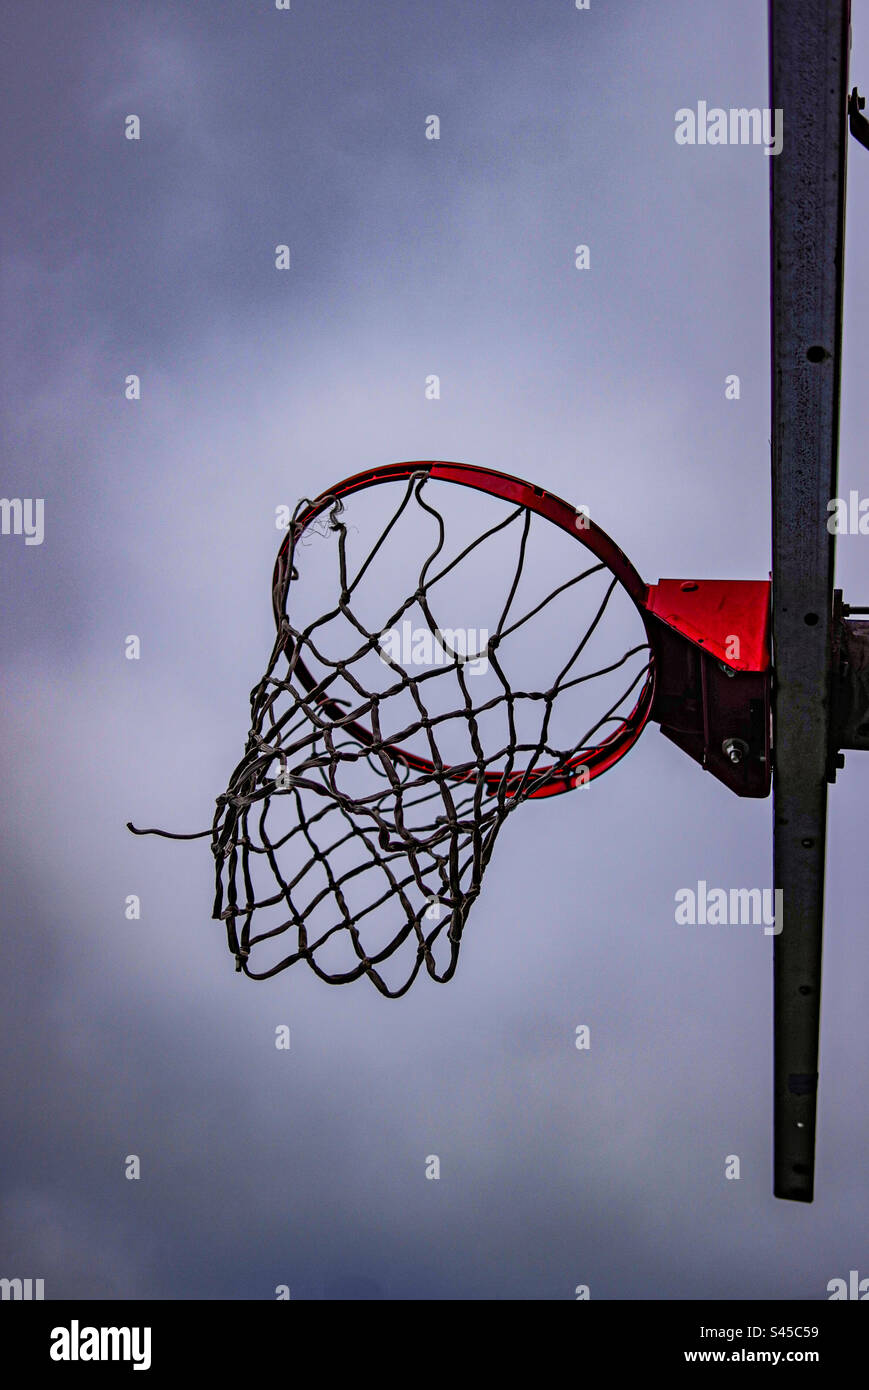 Basketball hoop on a overcast day Stock Photo - Alamy